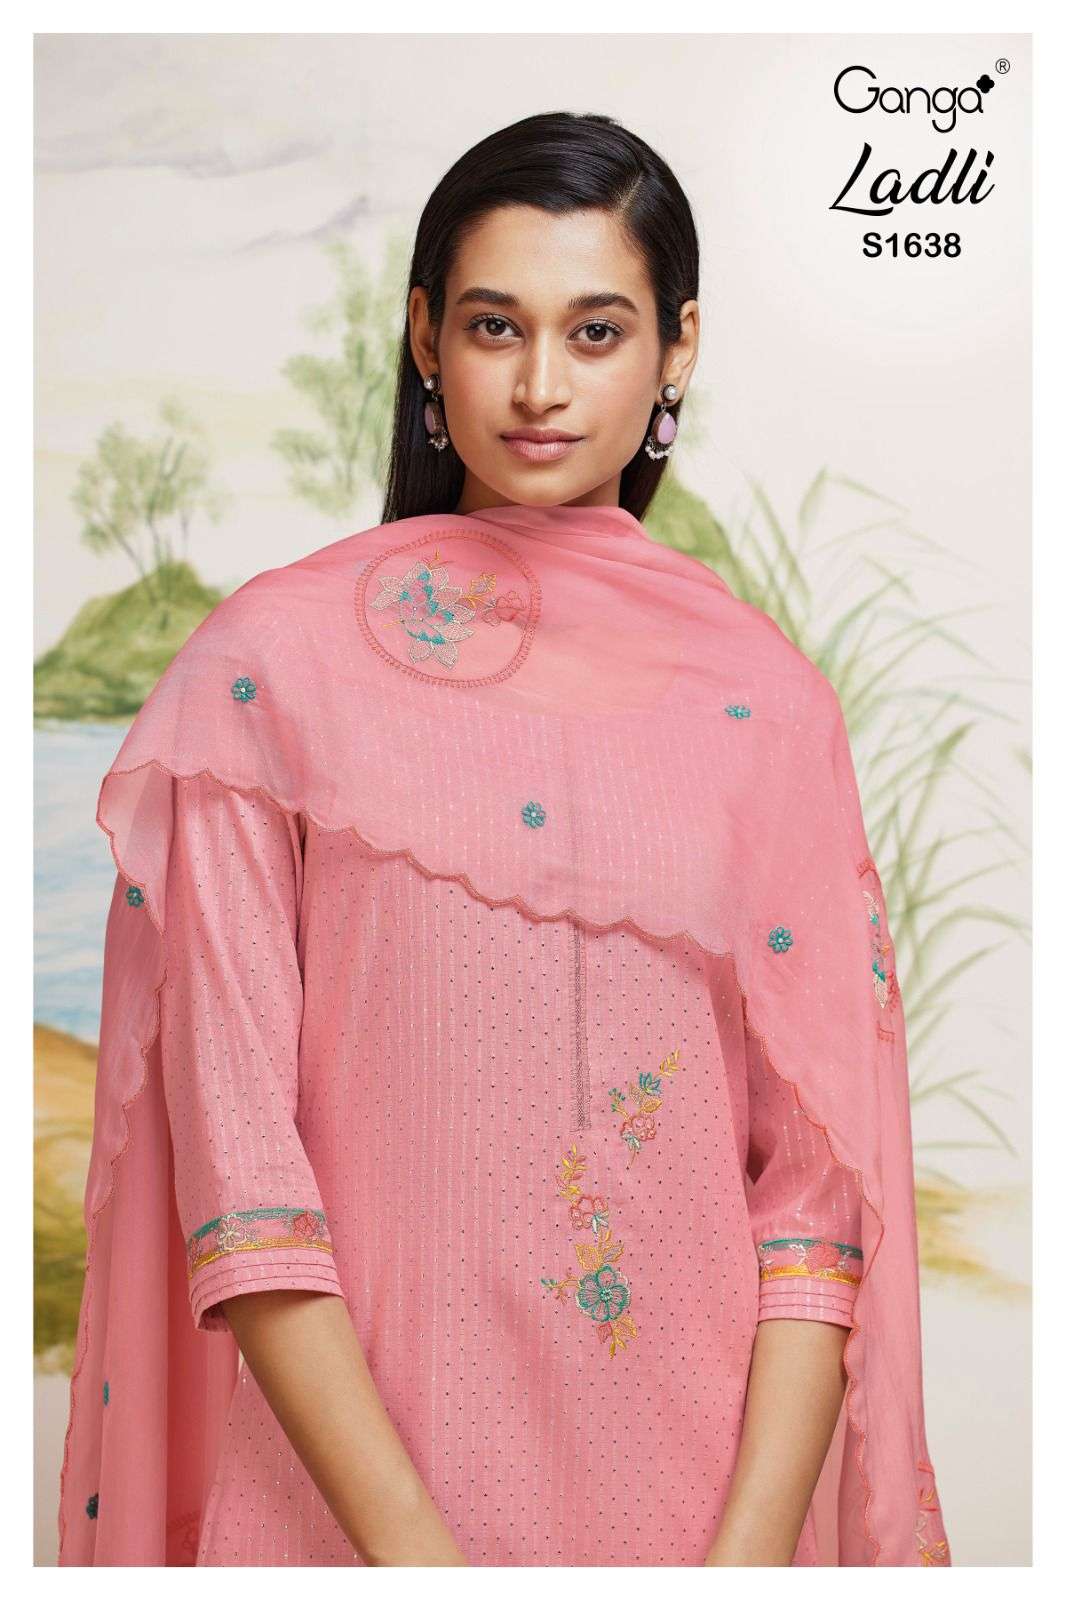 ganga ladli 1638 premium cotton jaqaurd designer unstich salwar kameez wholesale price 